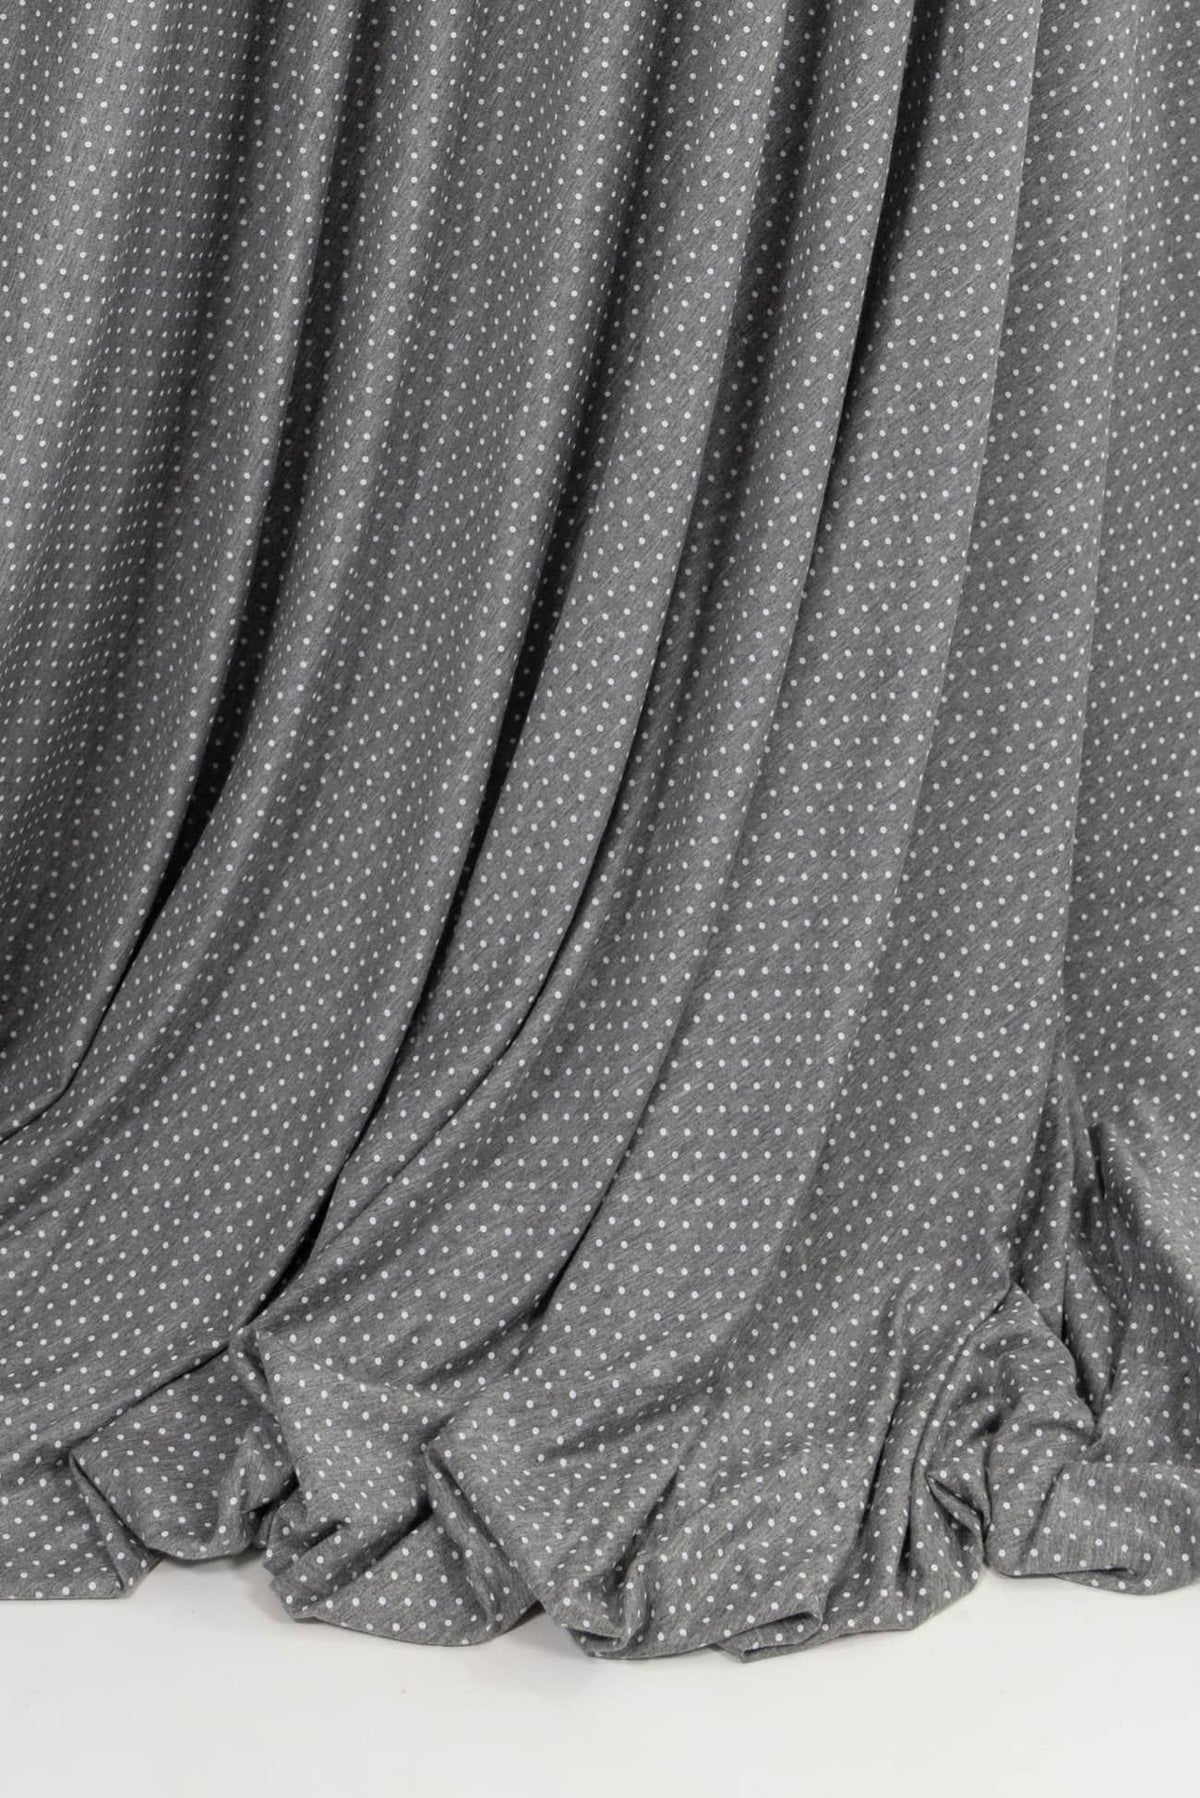 Audrey Dots Bamboo Knit - Marcy Tilton Fabrics